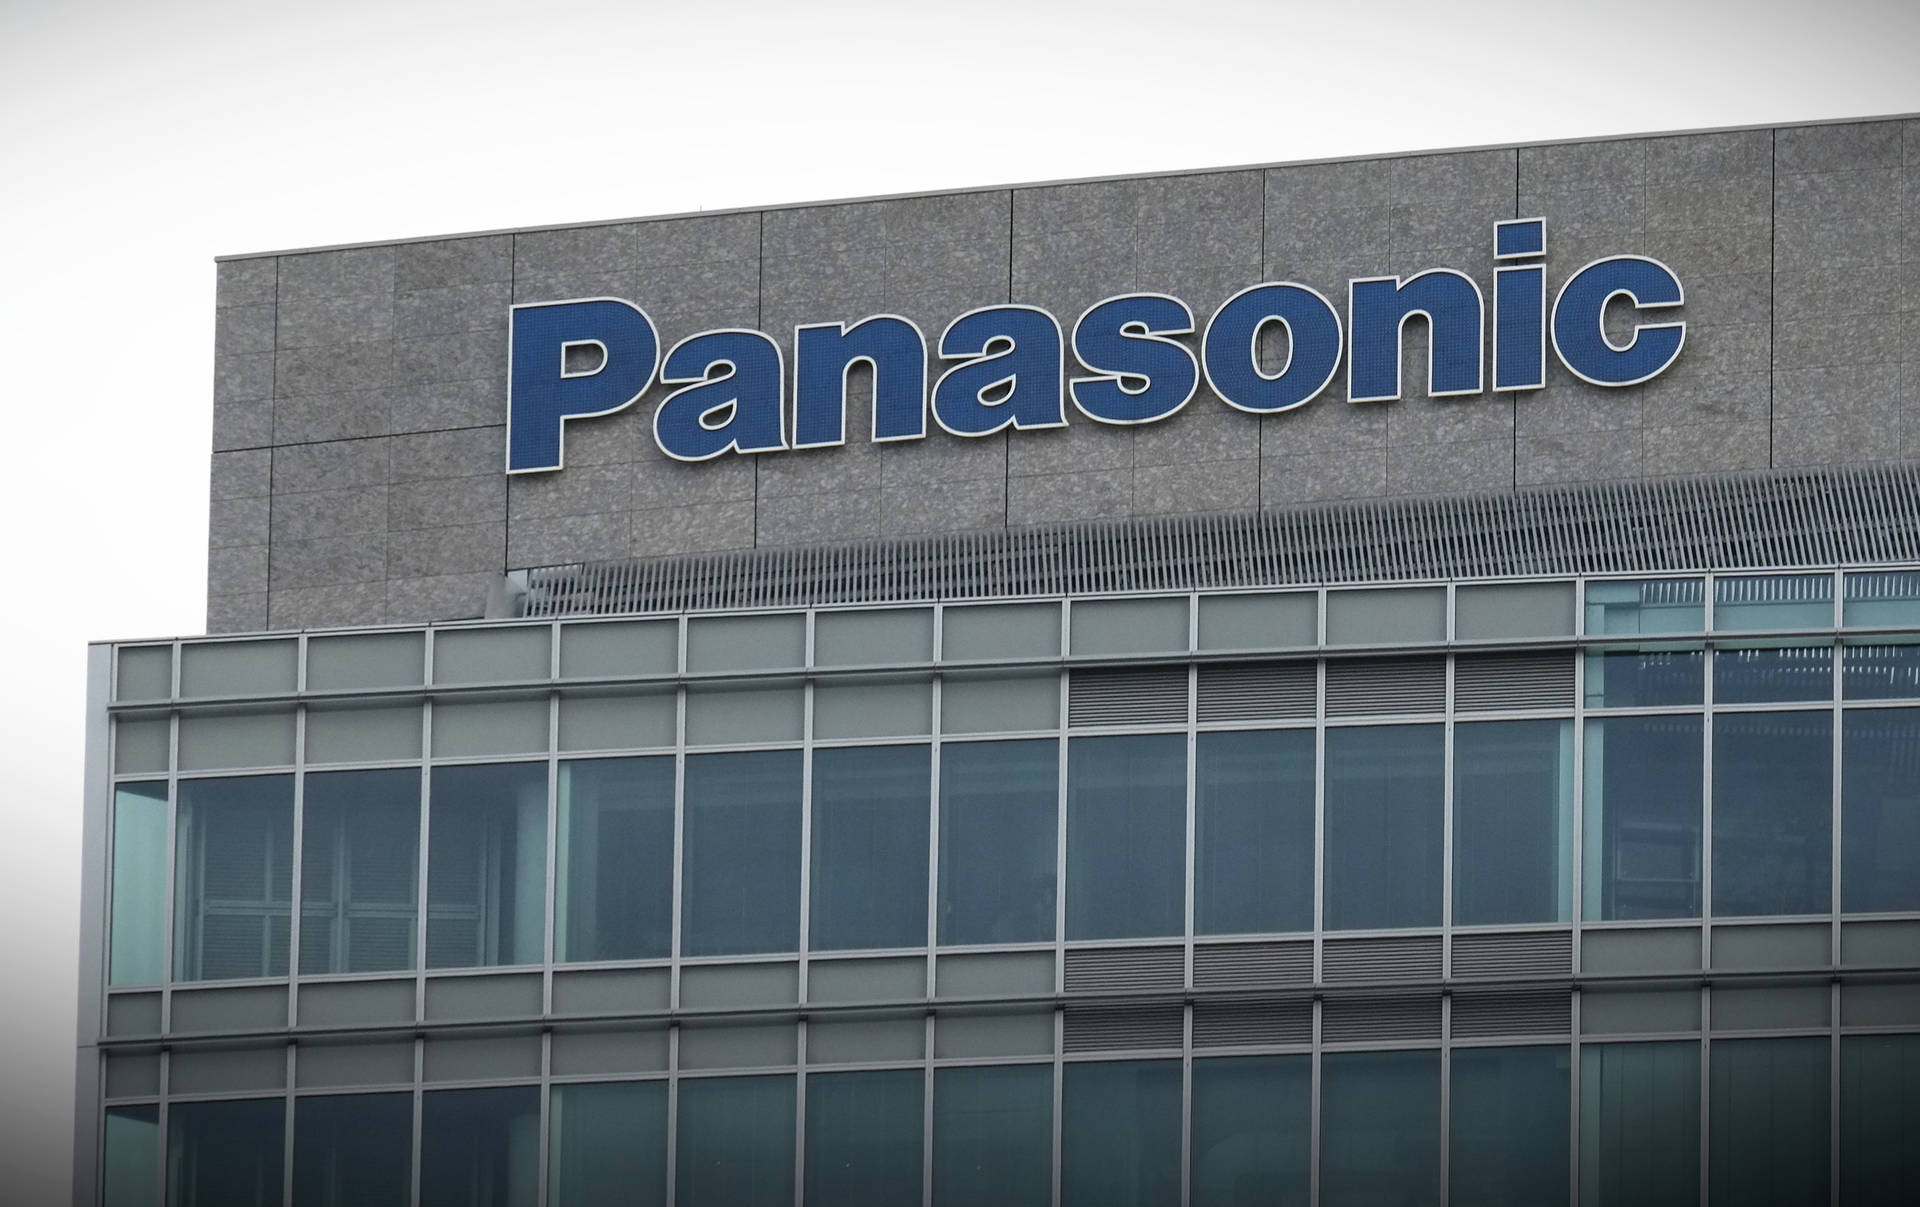 Panasonic Grey Building